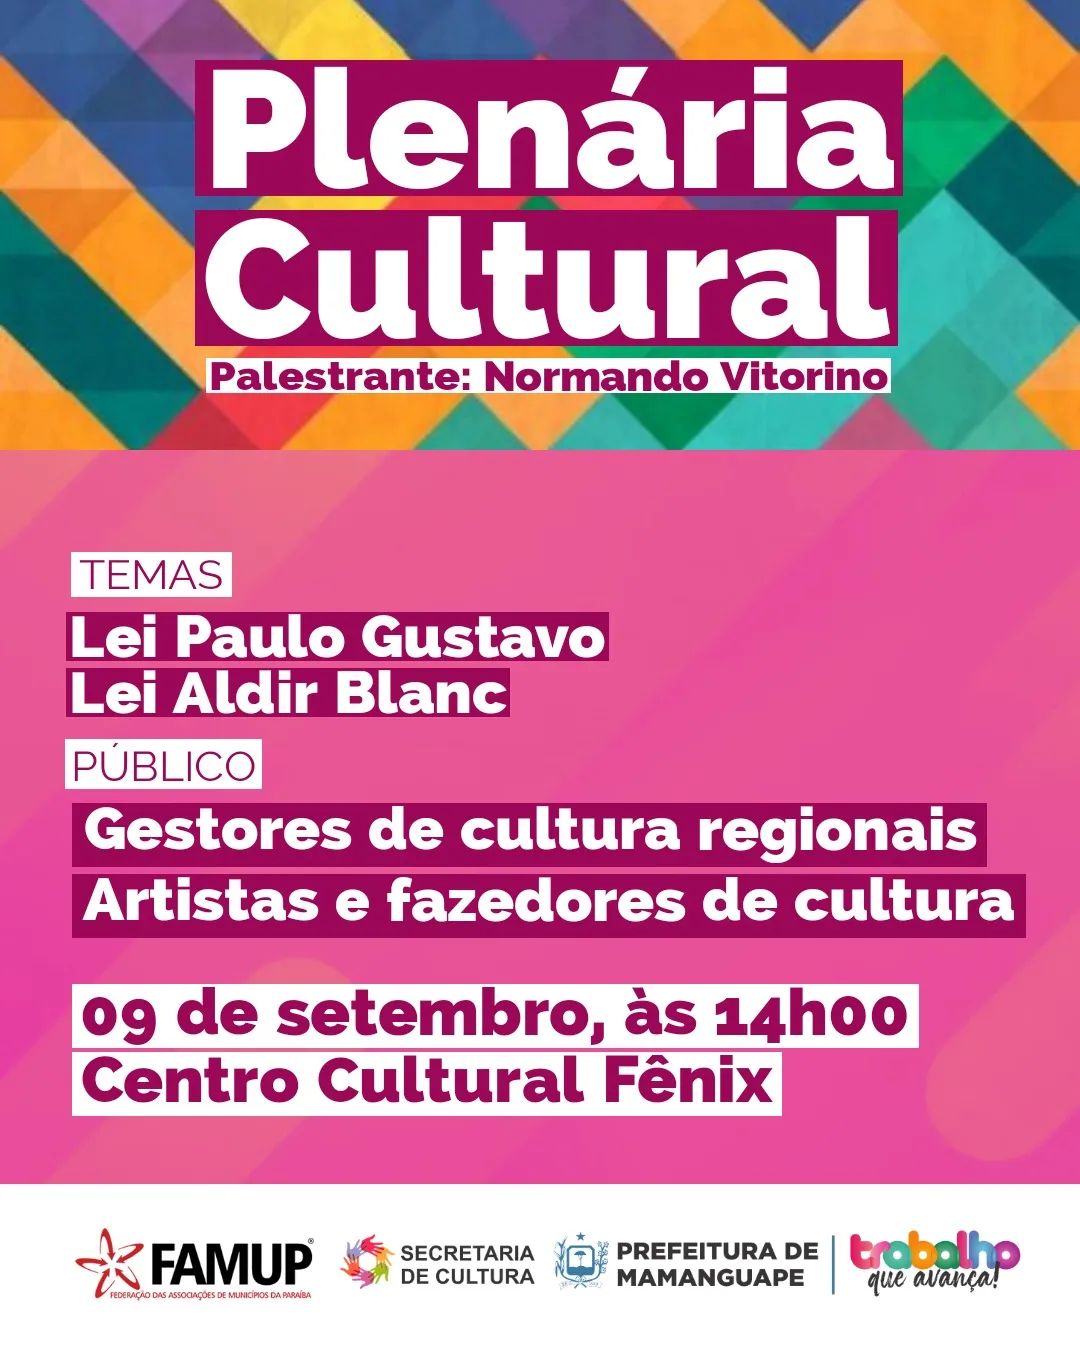 Plenária Cultural debate Leis Aldir Blanc 2 e Paulo Gustavo